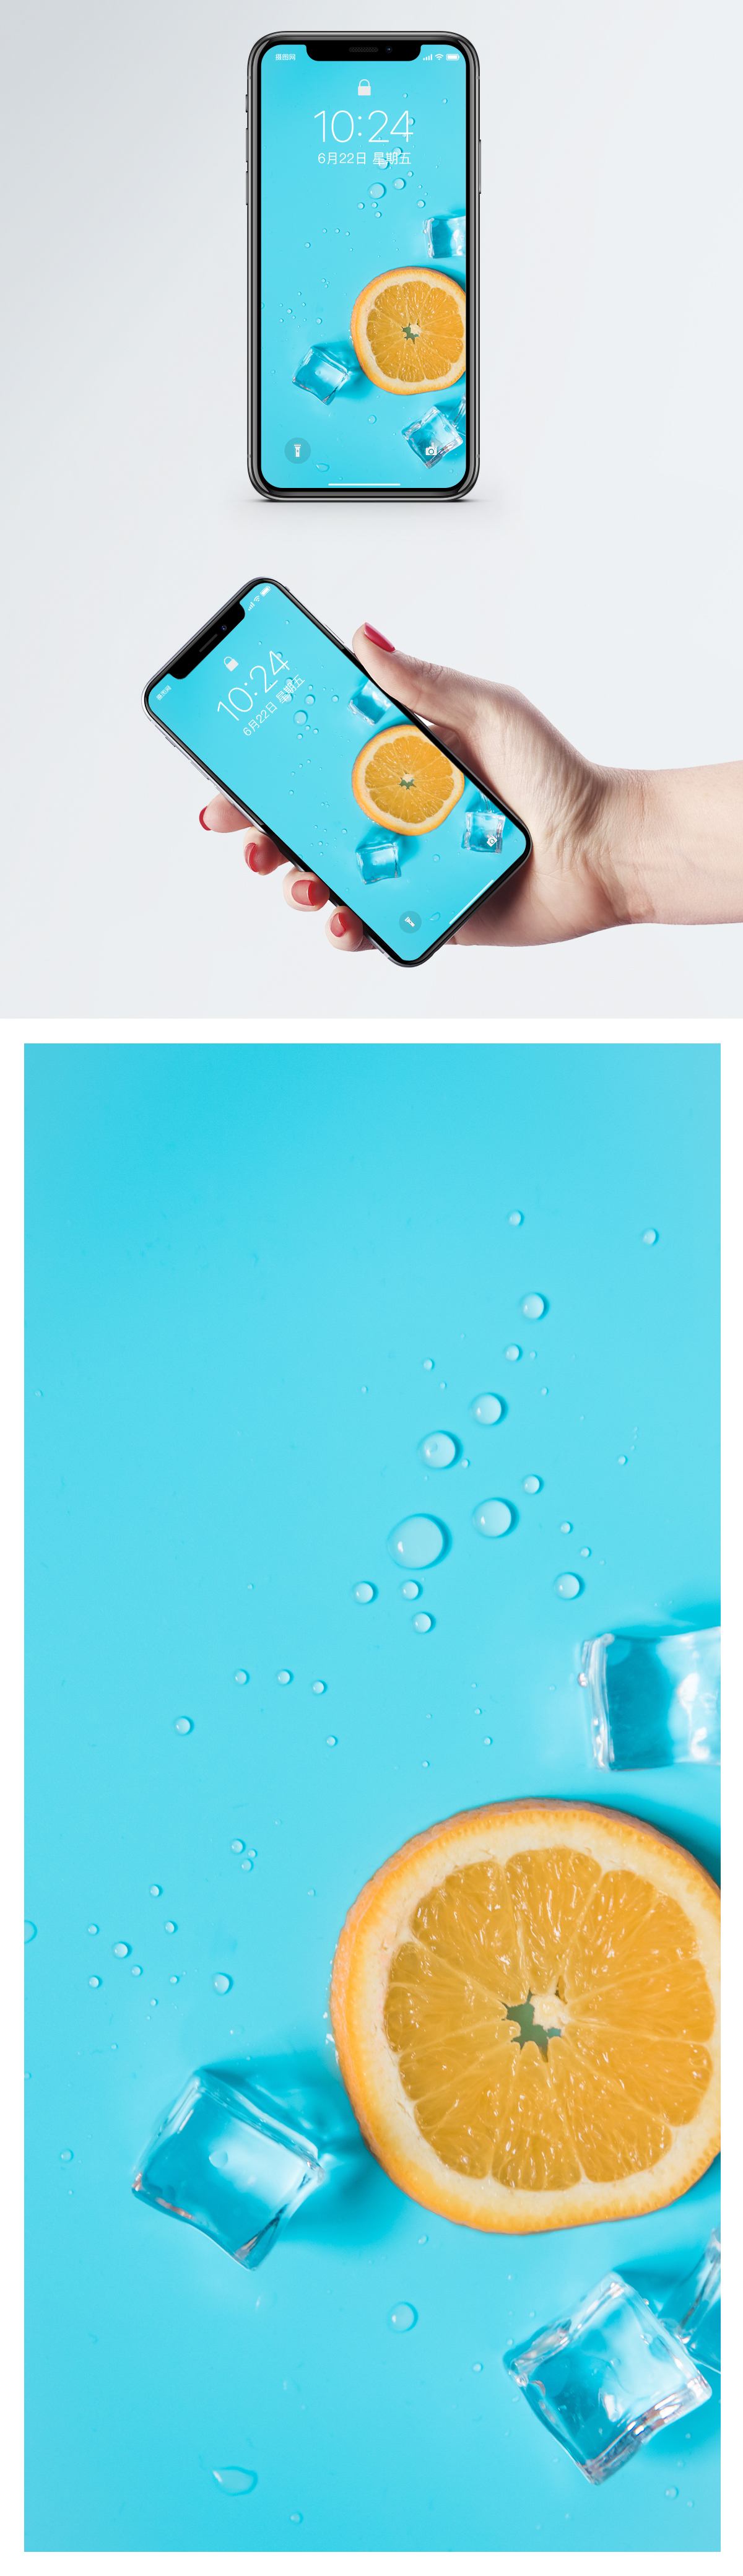 Summer Swimming Mobile Wallpaper Backgrounds Images Free Download 400251238 Lovepik Com